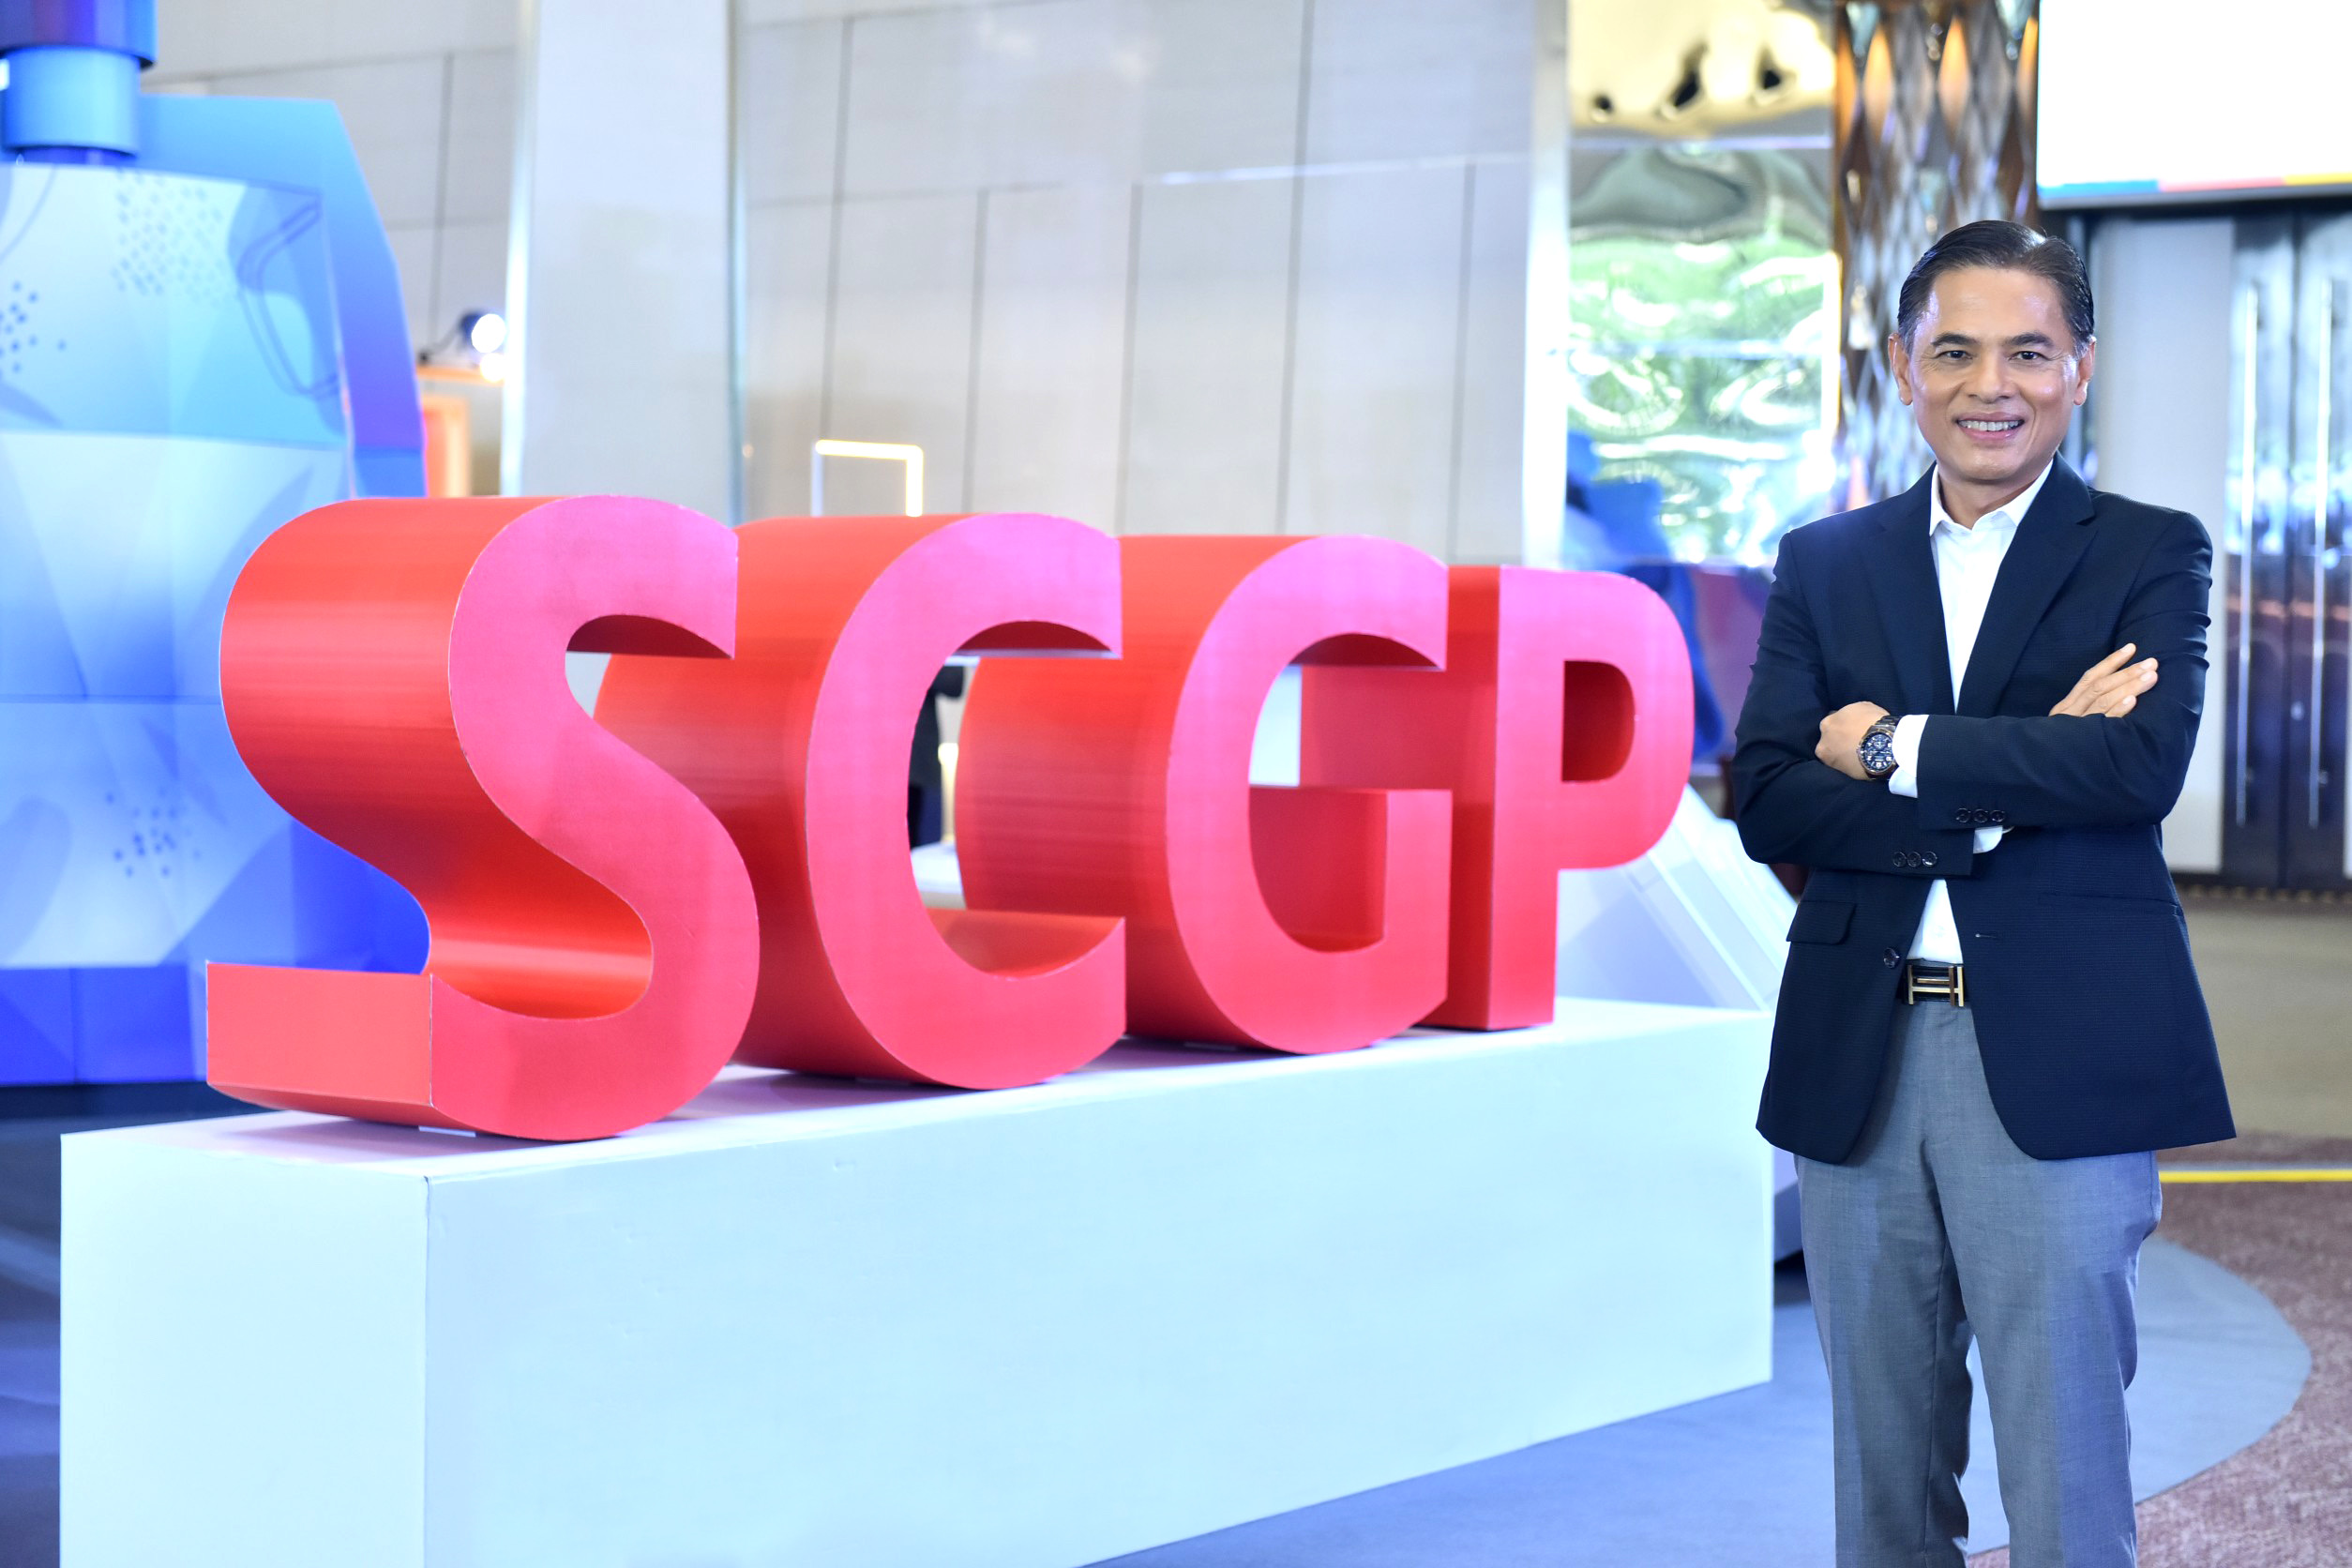 SCGP เคาะราคาเสนอขายสุดท้ายหุ้น IPO ที่ 35.00 บาทต่อหุ้น